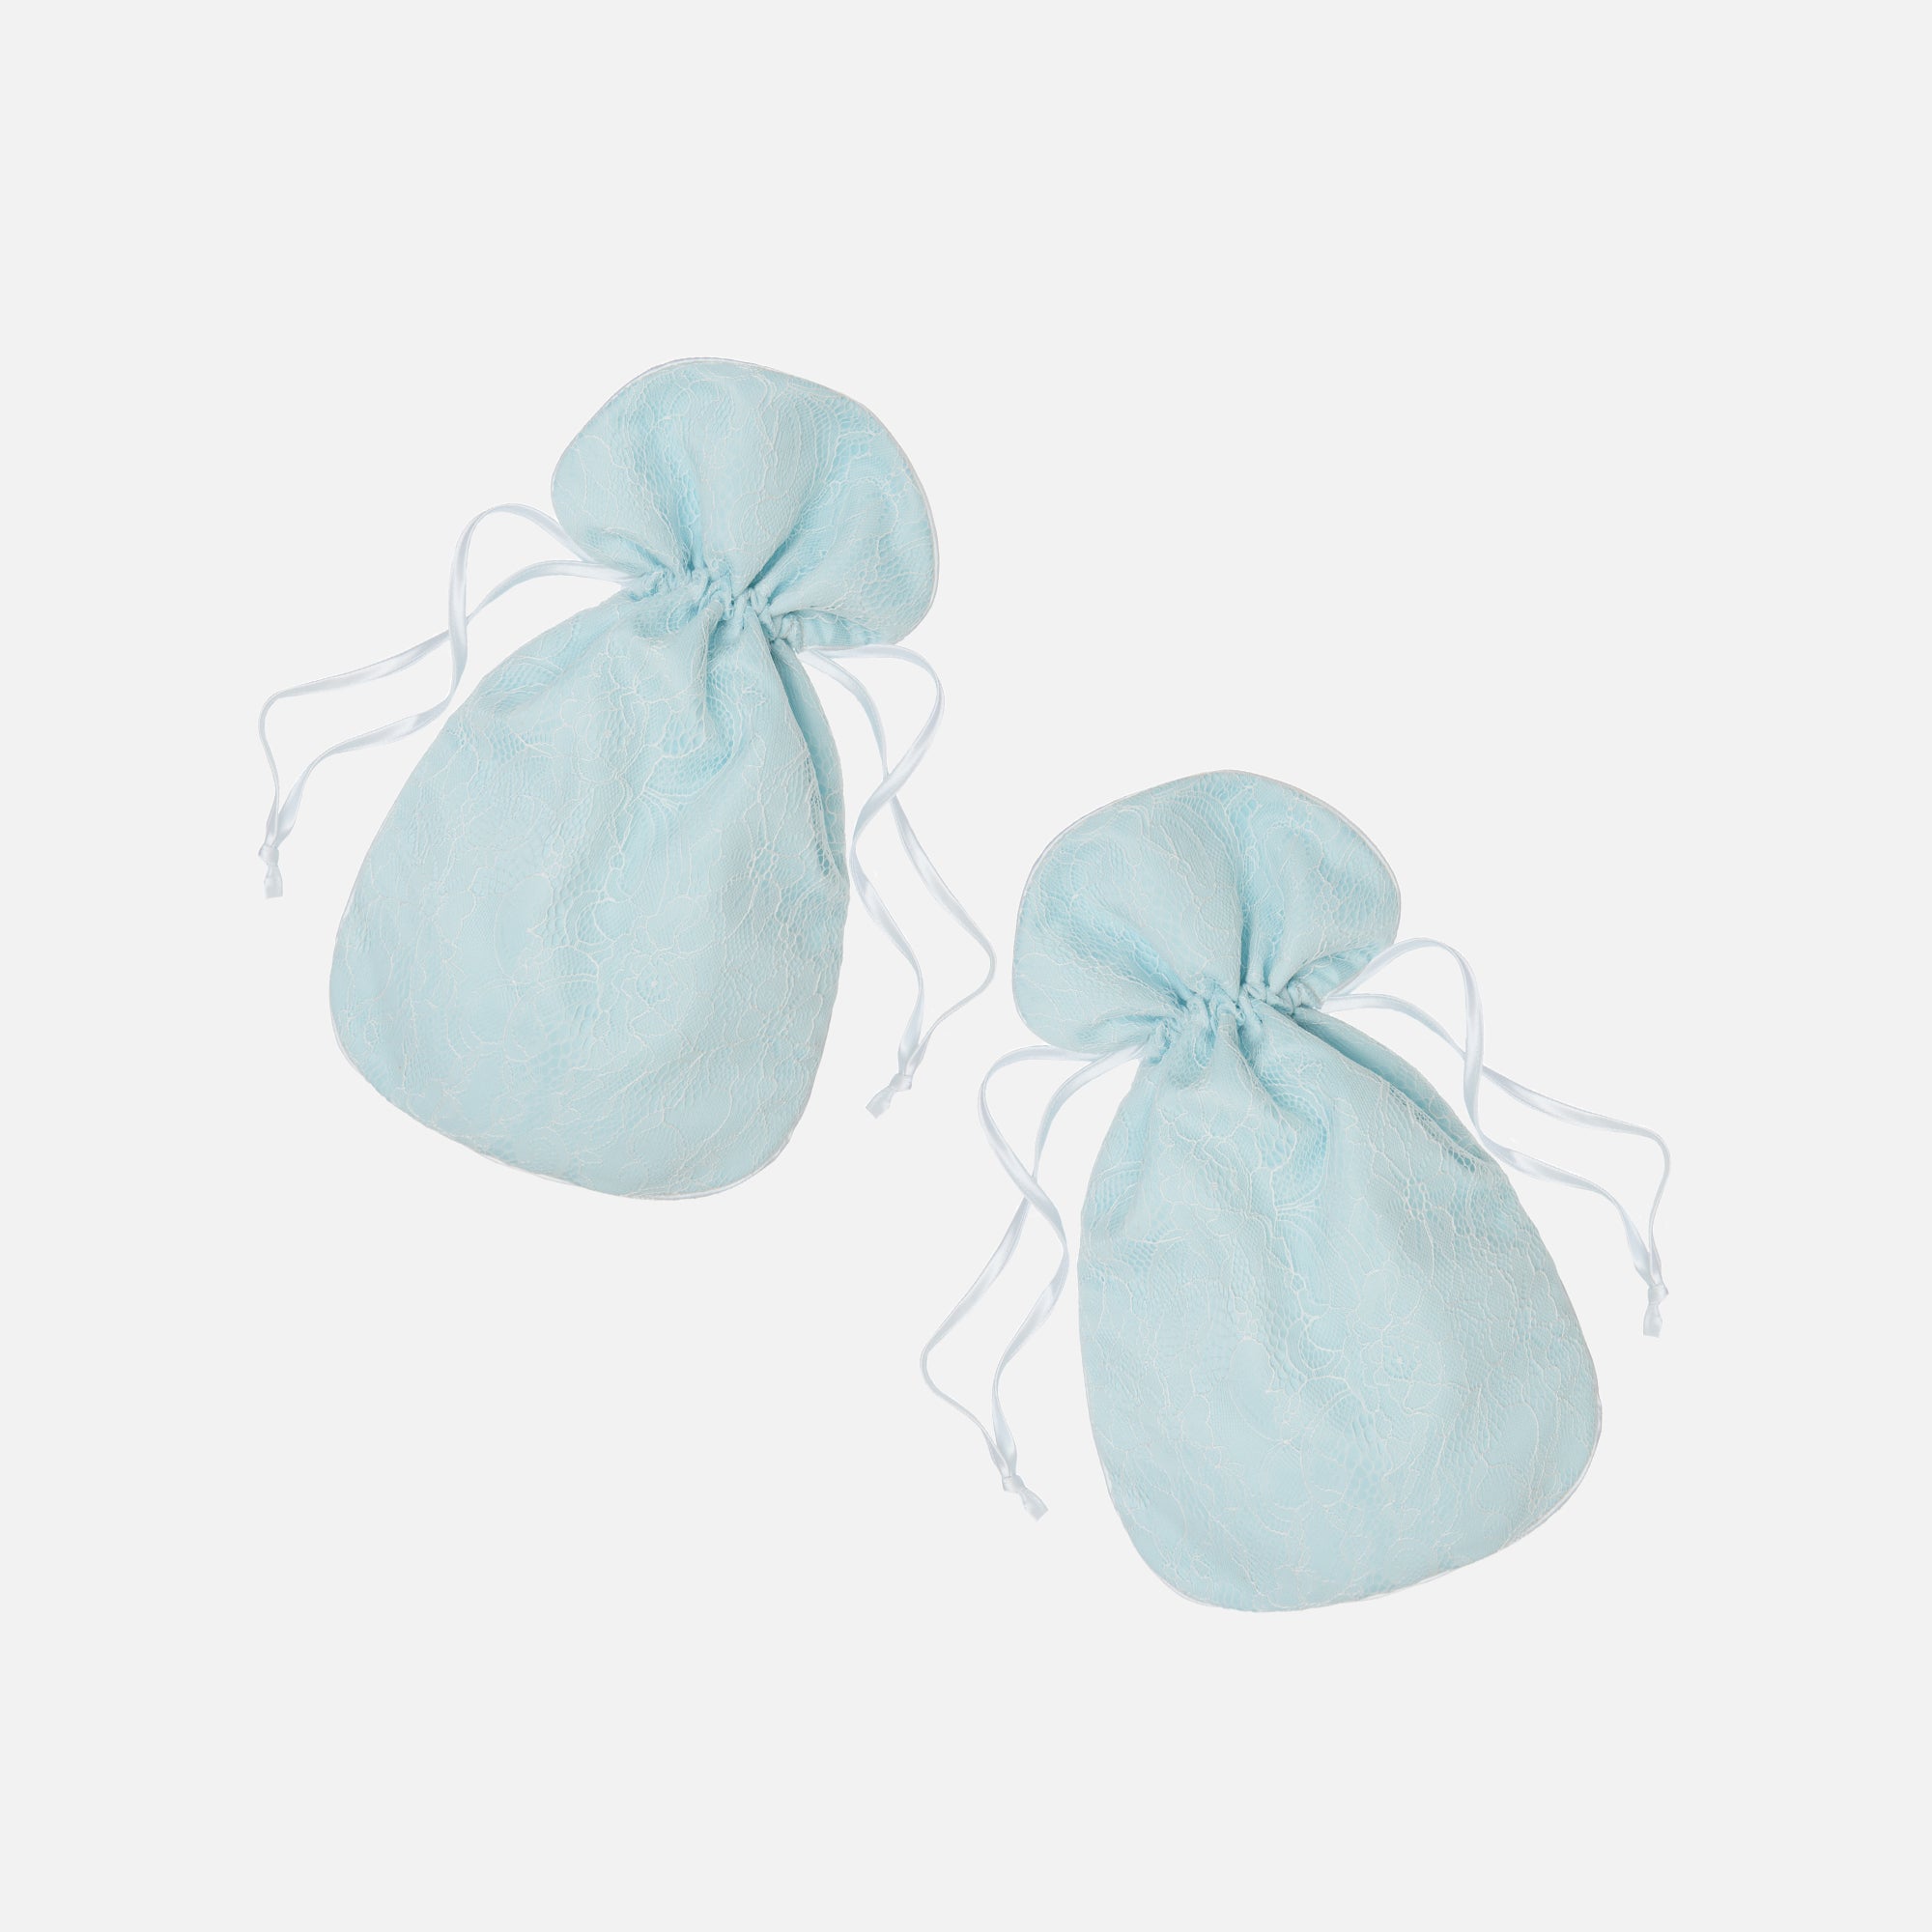 Sweet Blue Lace Shoe Bag - Set of 2